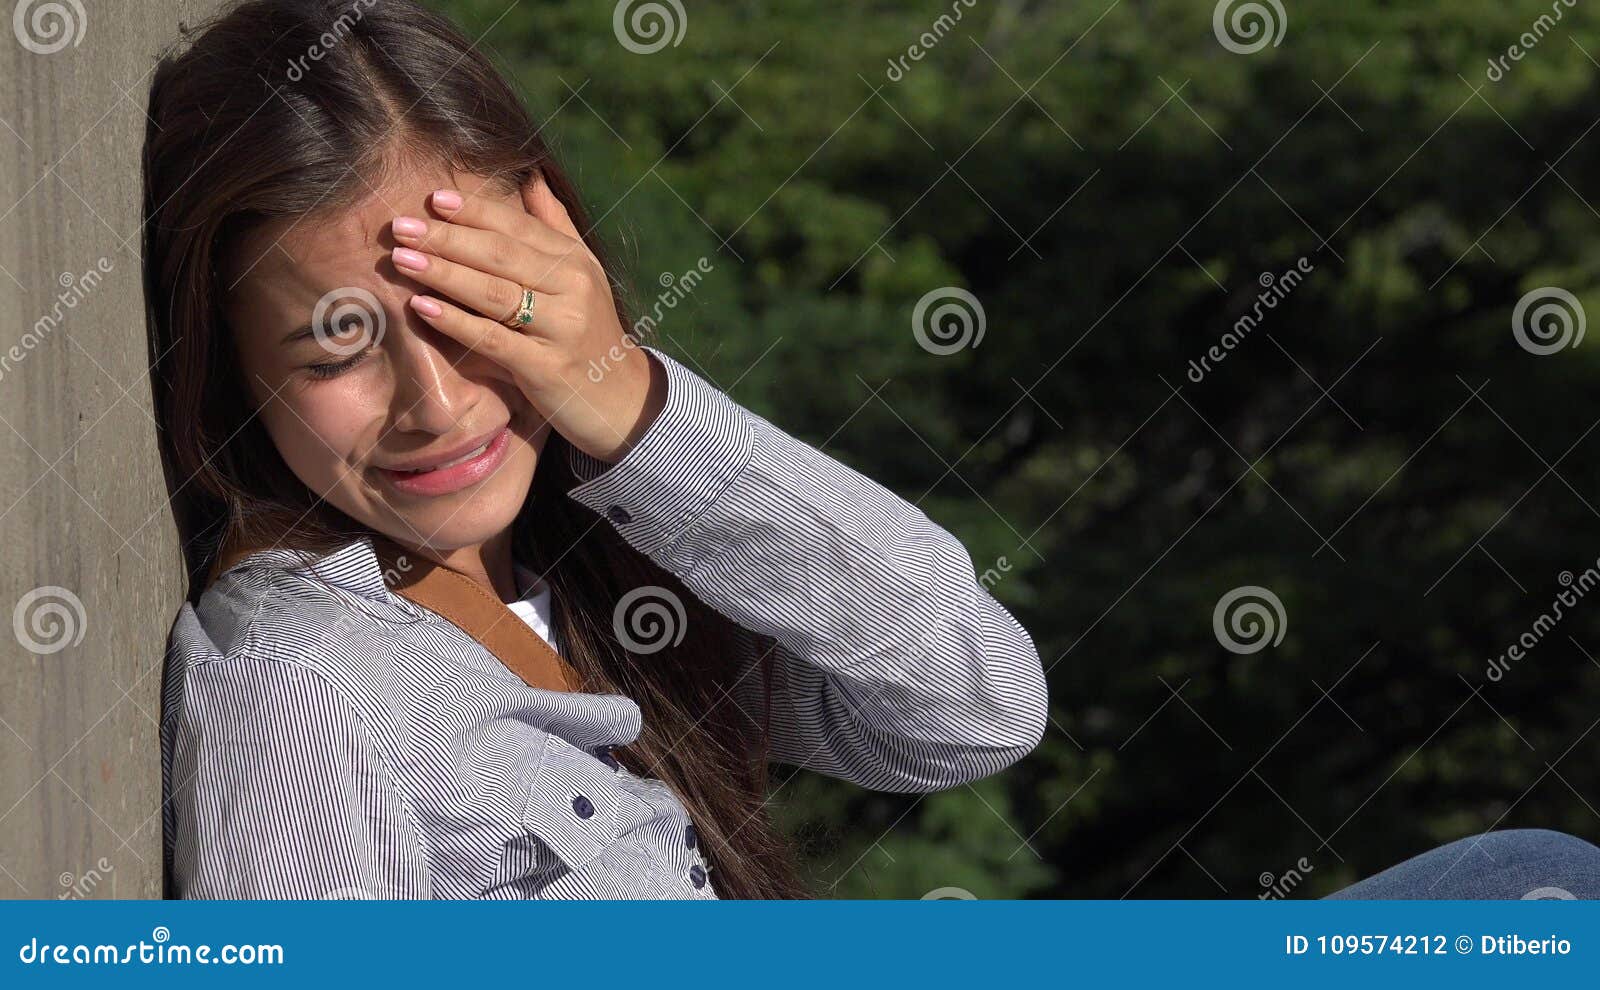 Sad Crying Teen Girl stock photo. Image of young, youth - 109574212